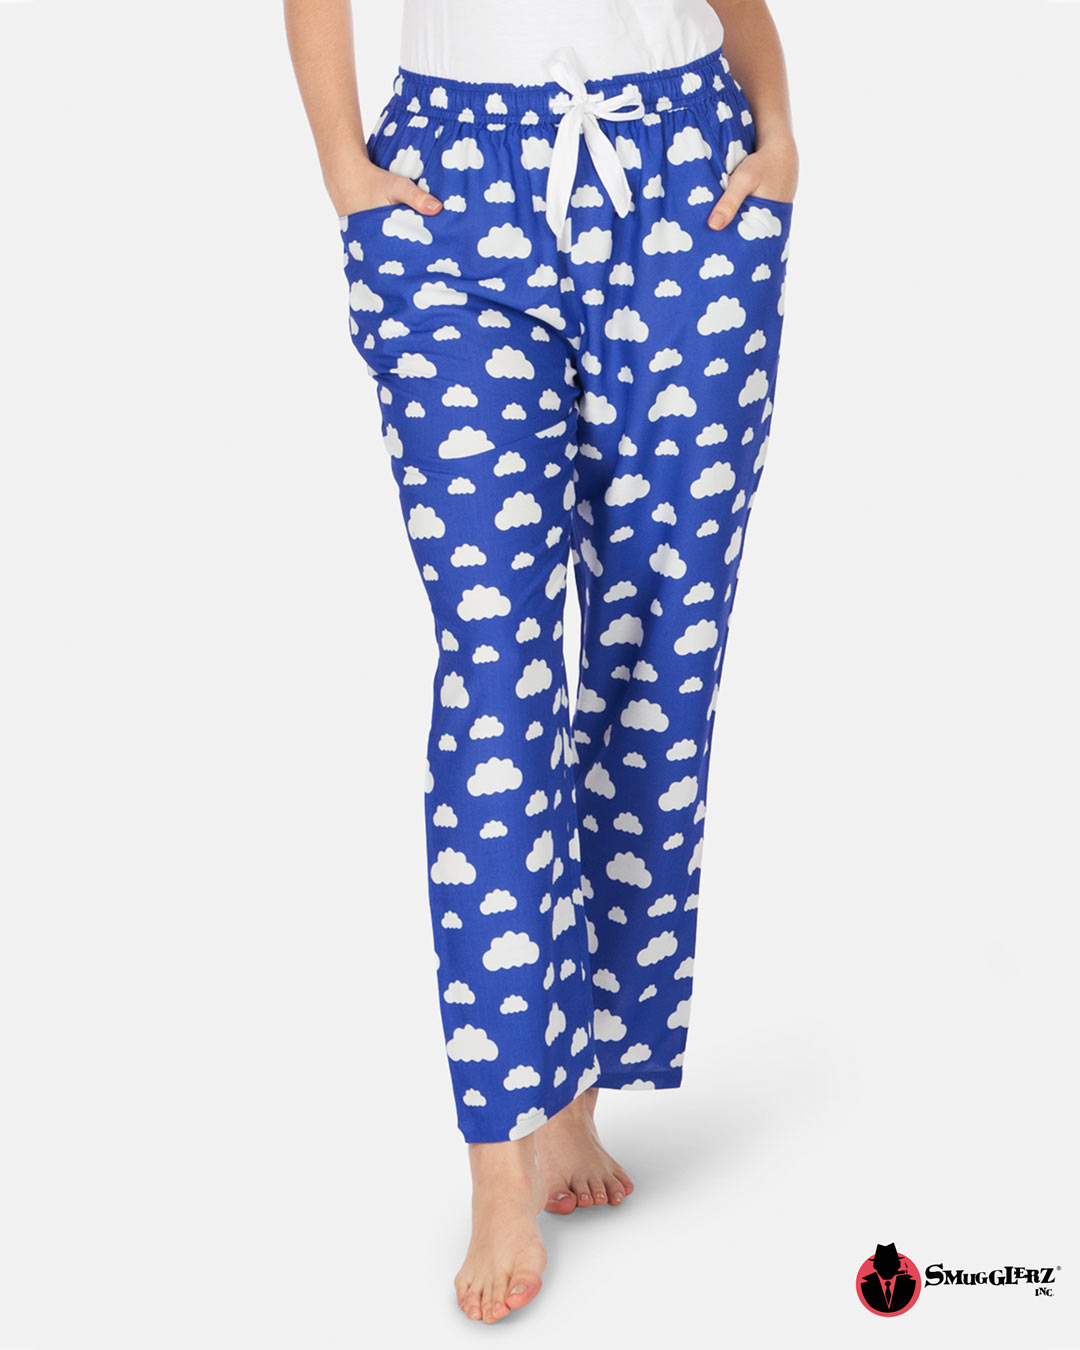 Buy Women's Blue All Over Printed Pyjamas Online in India at Bewakoof